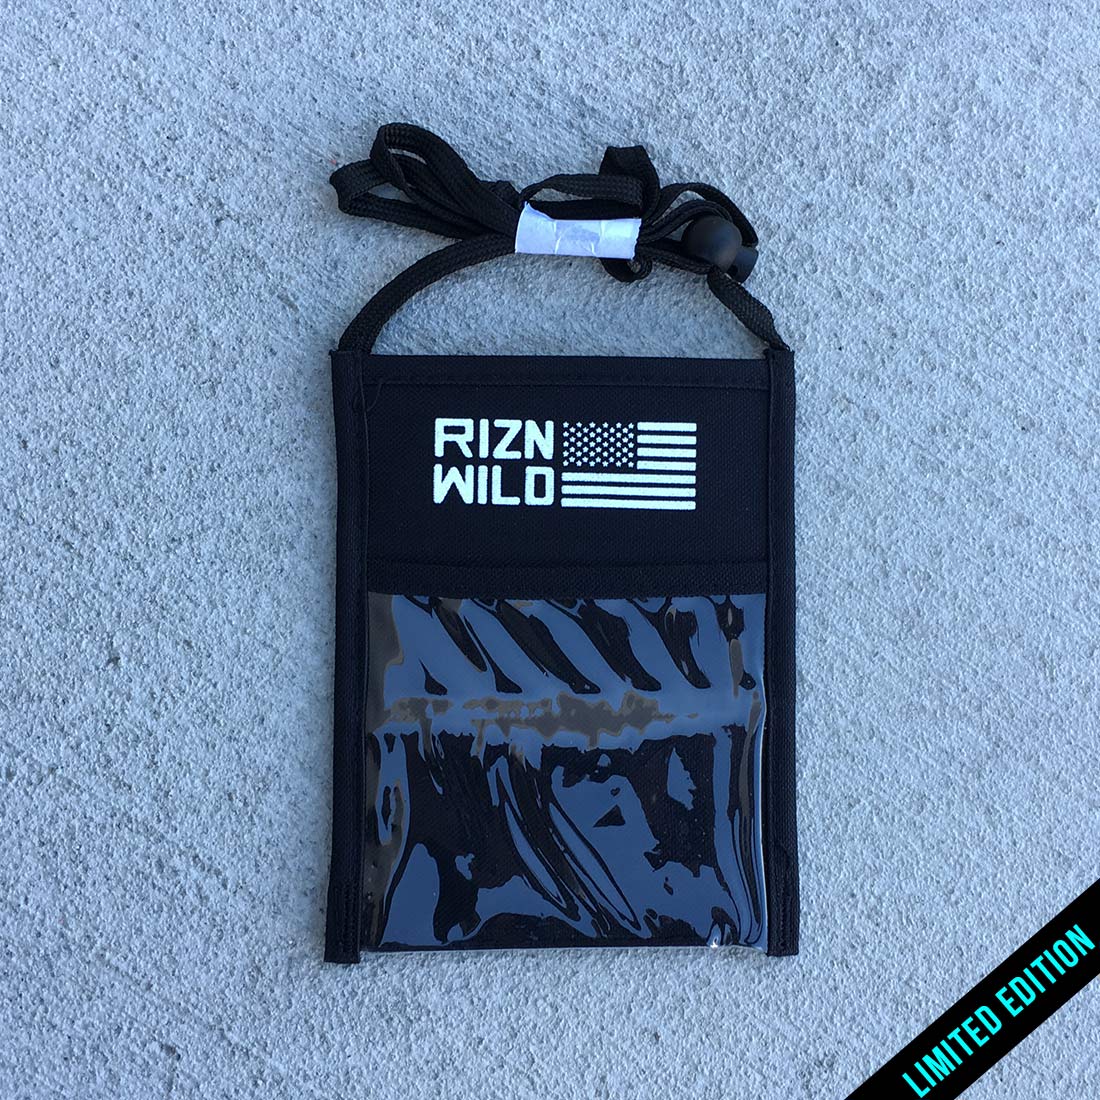 RIZNWILD | Black badge / travel id holder with American flag logo